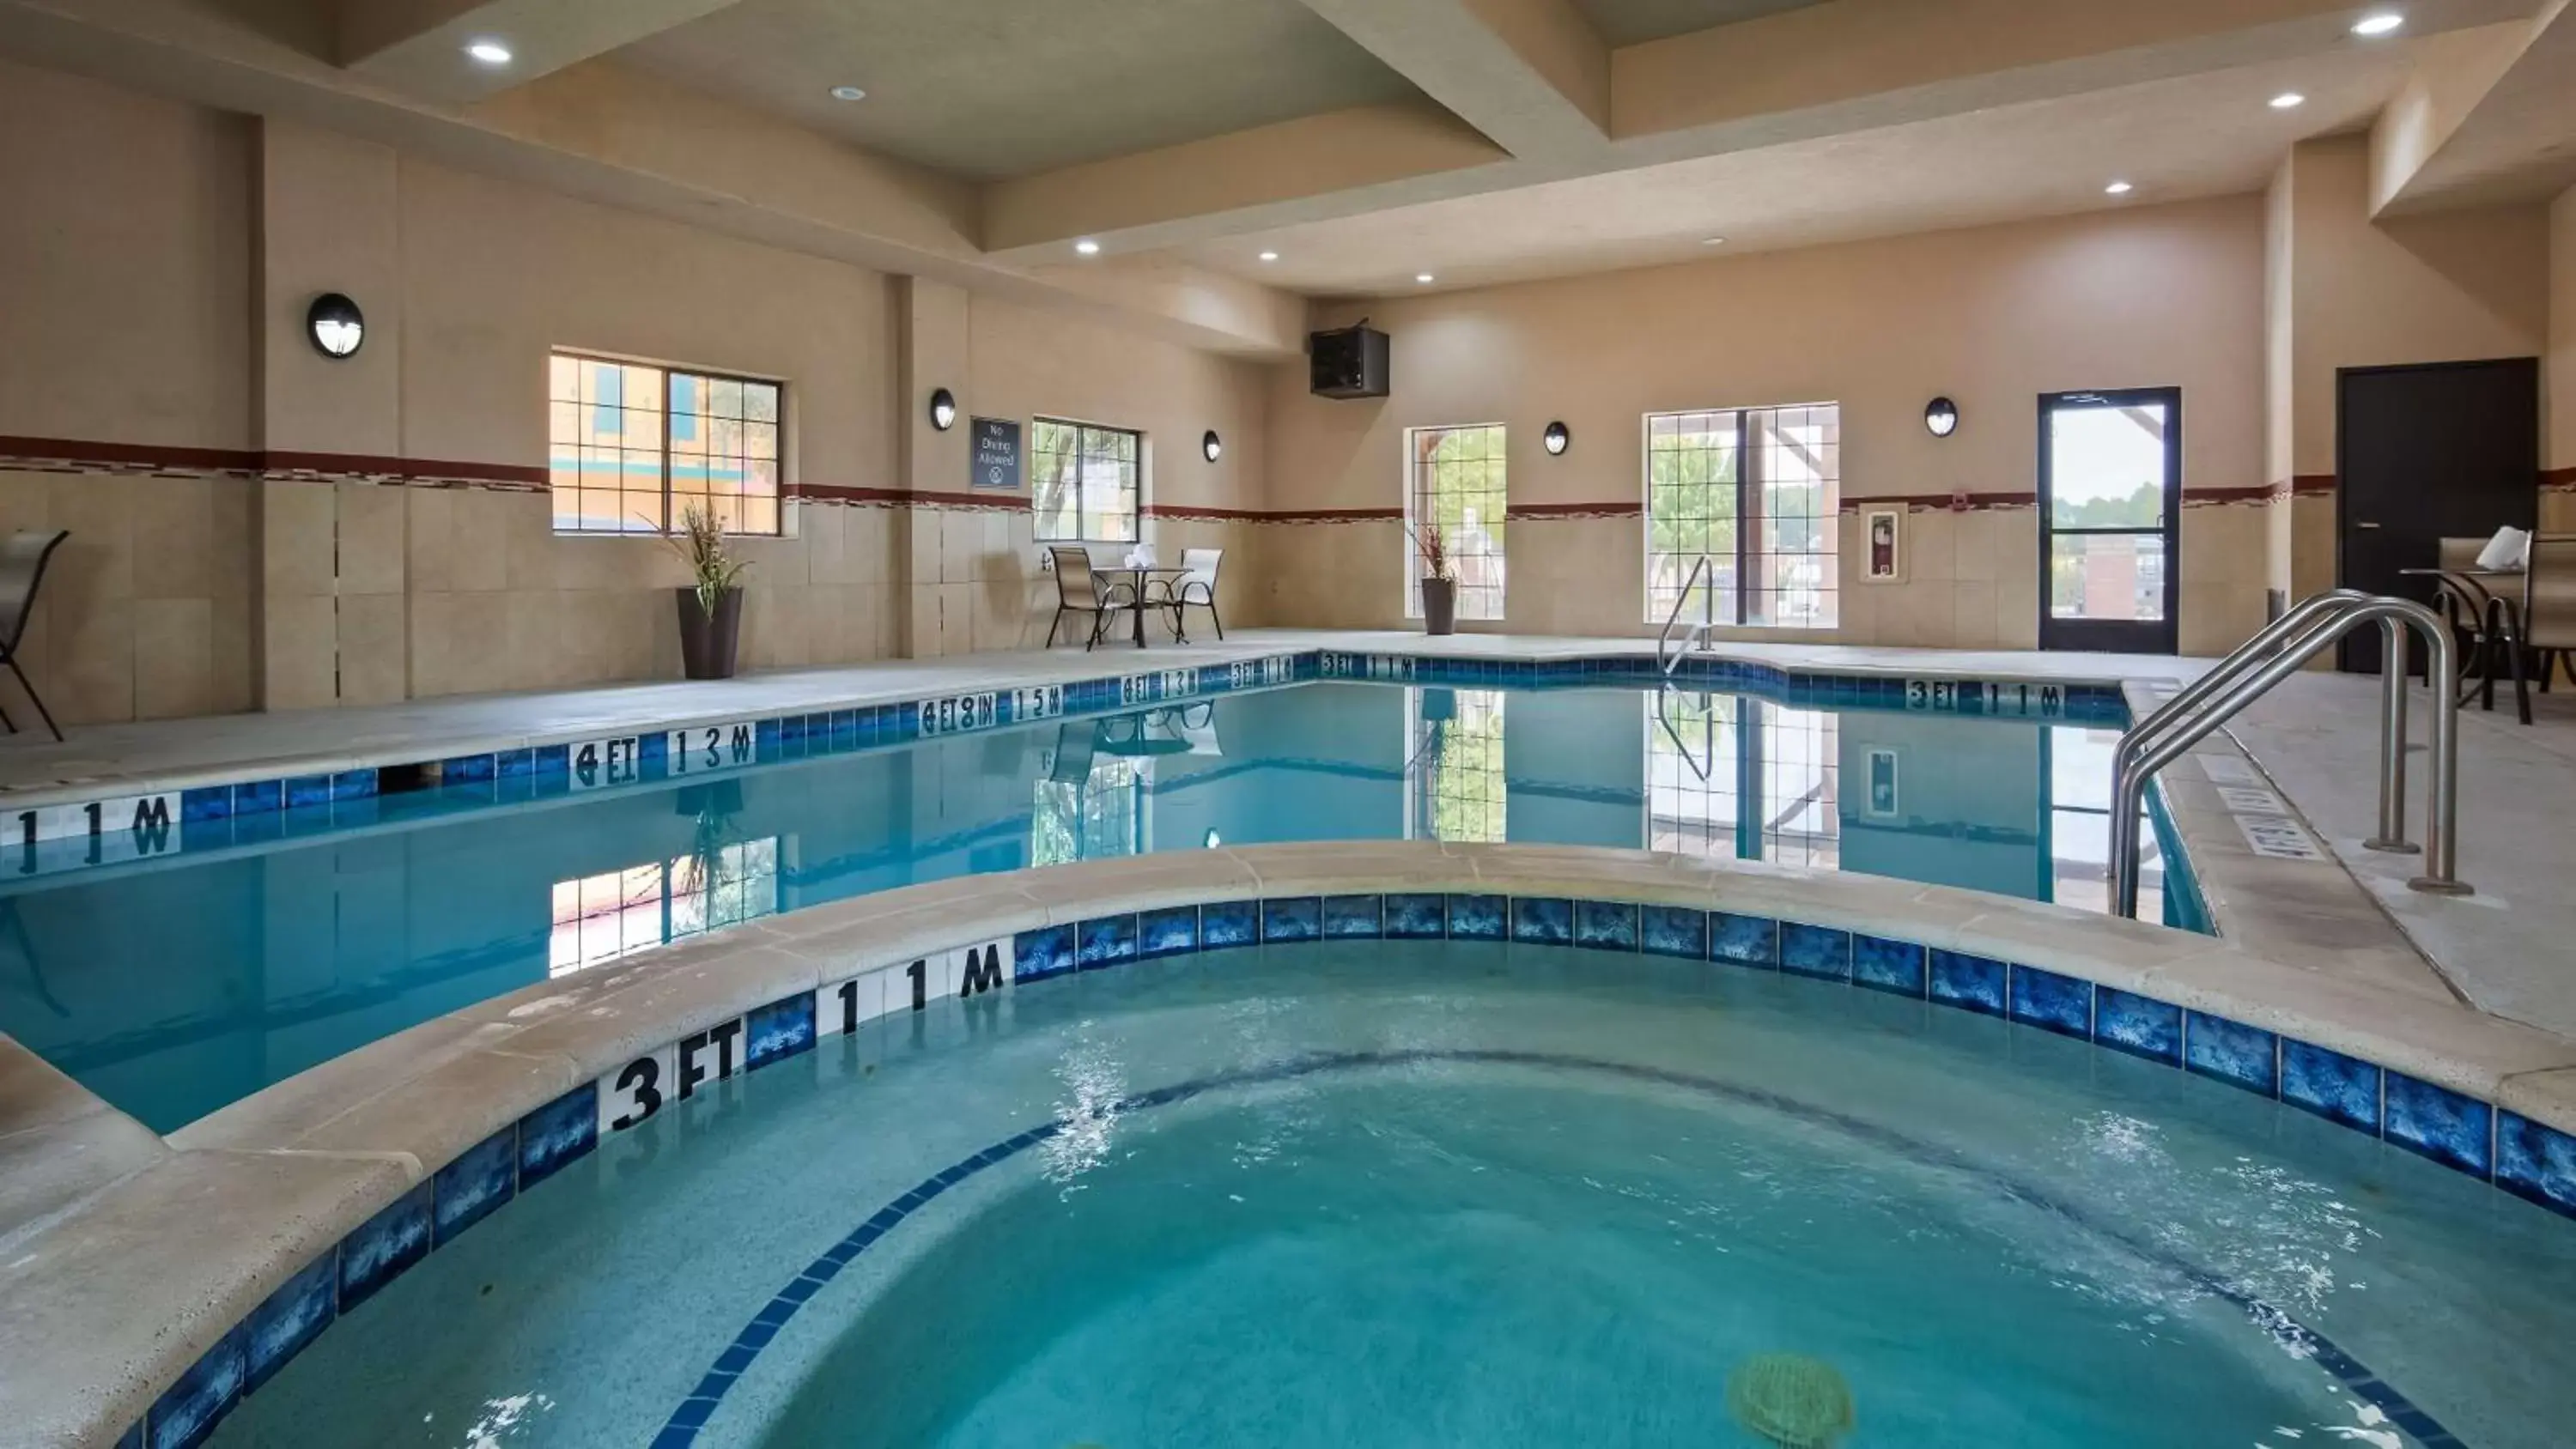 On site, Swimming Pool in Best Western Plus Mansfield Inn and Suites